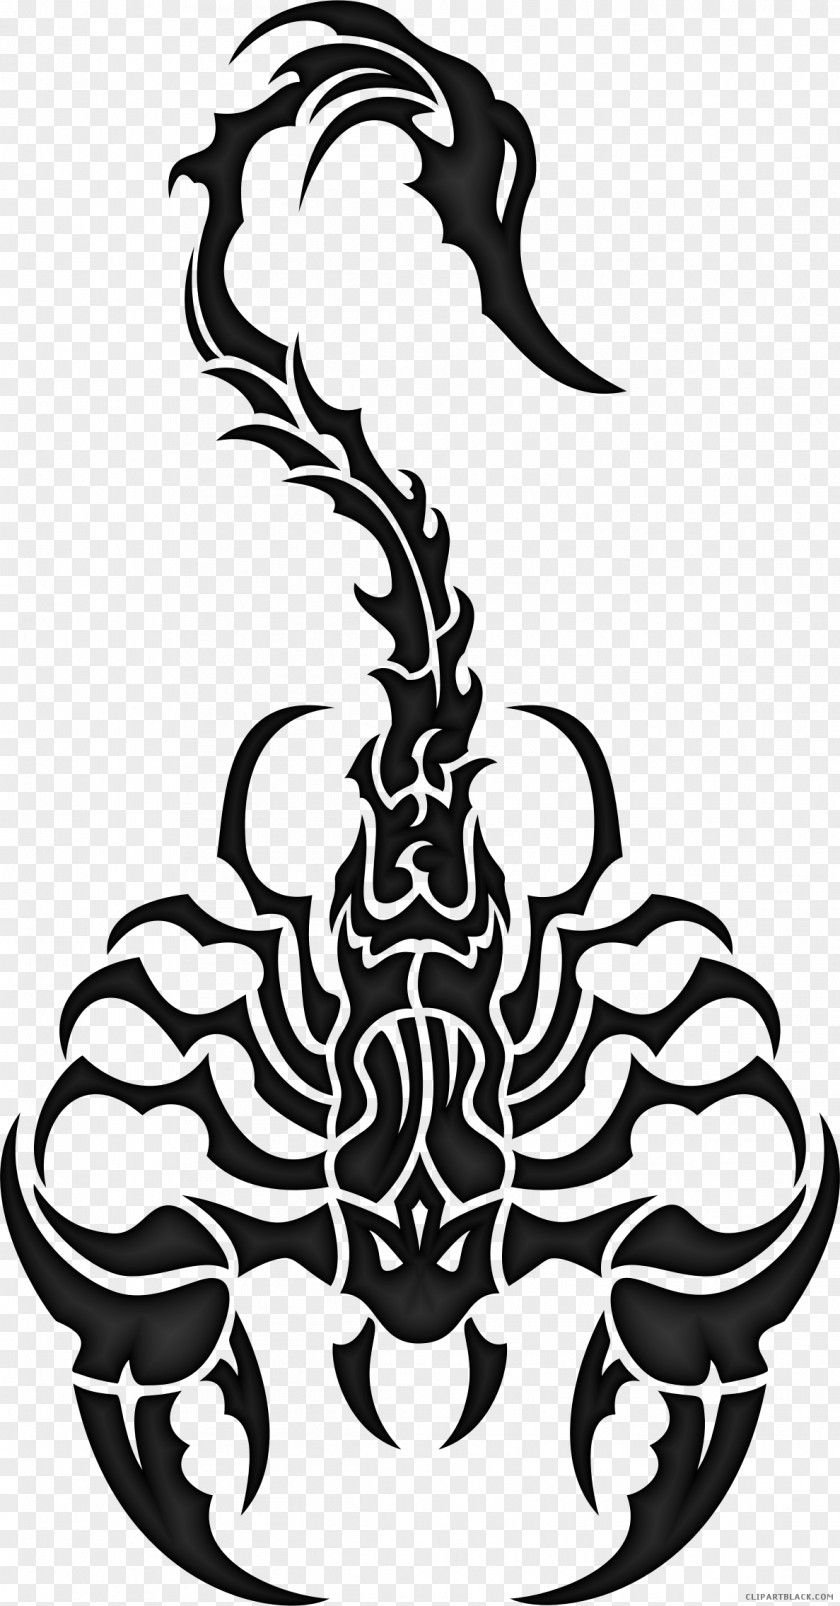 Scorpion Vector Graphics Clip Art Image PNG